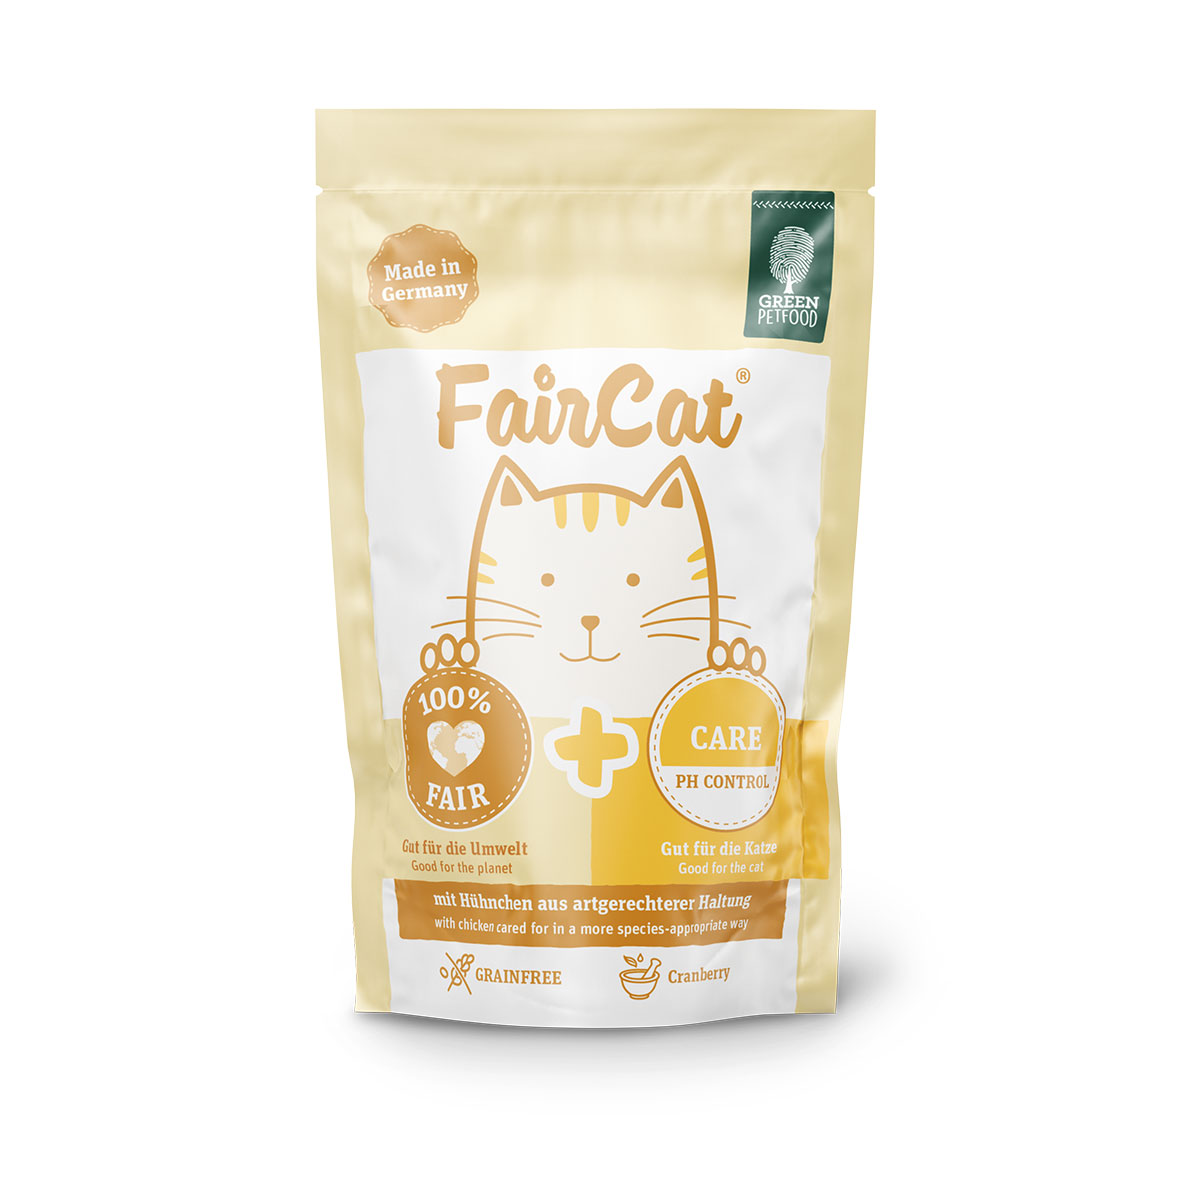 FairCat Care 8x85g von Green Petfood